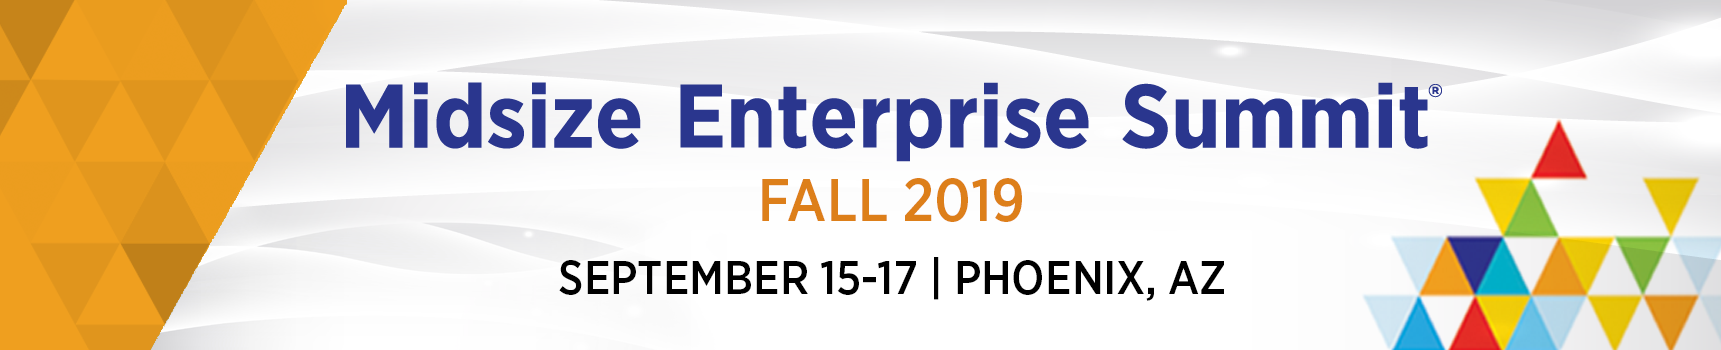 Midsize Enterprise Summit Fall 2019